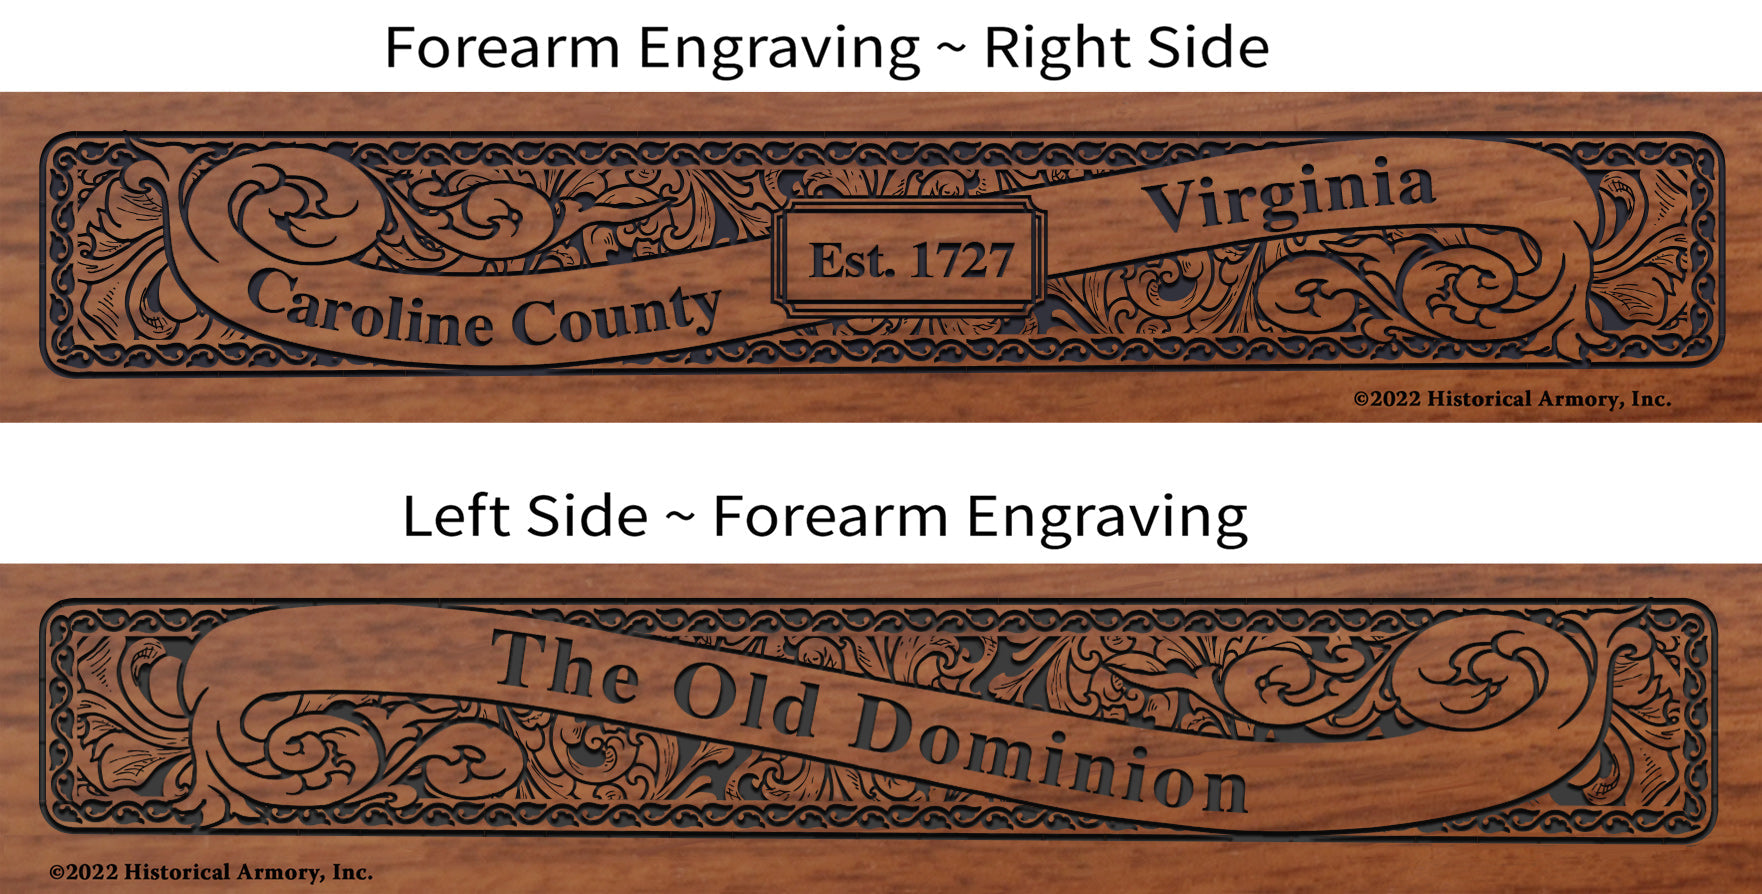 Caroline County Virginia Engraved Rifle Forearm